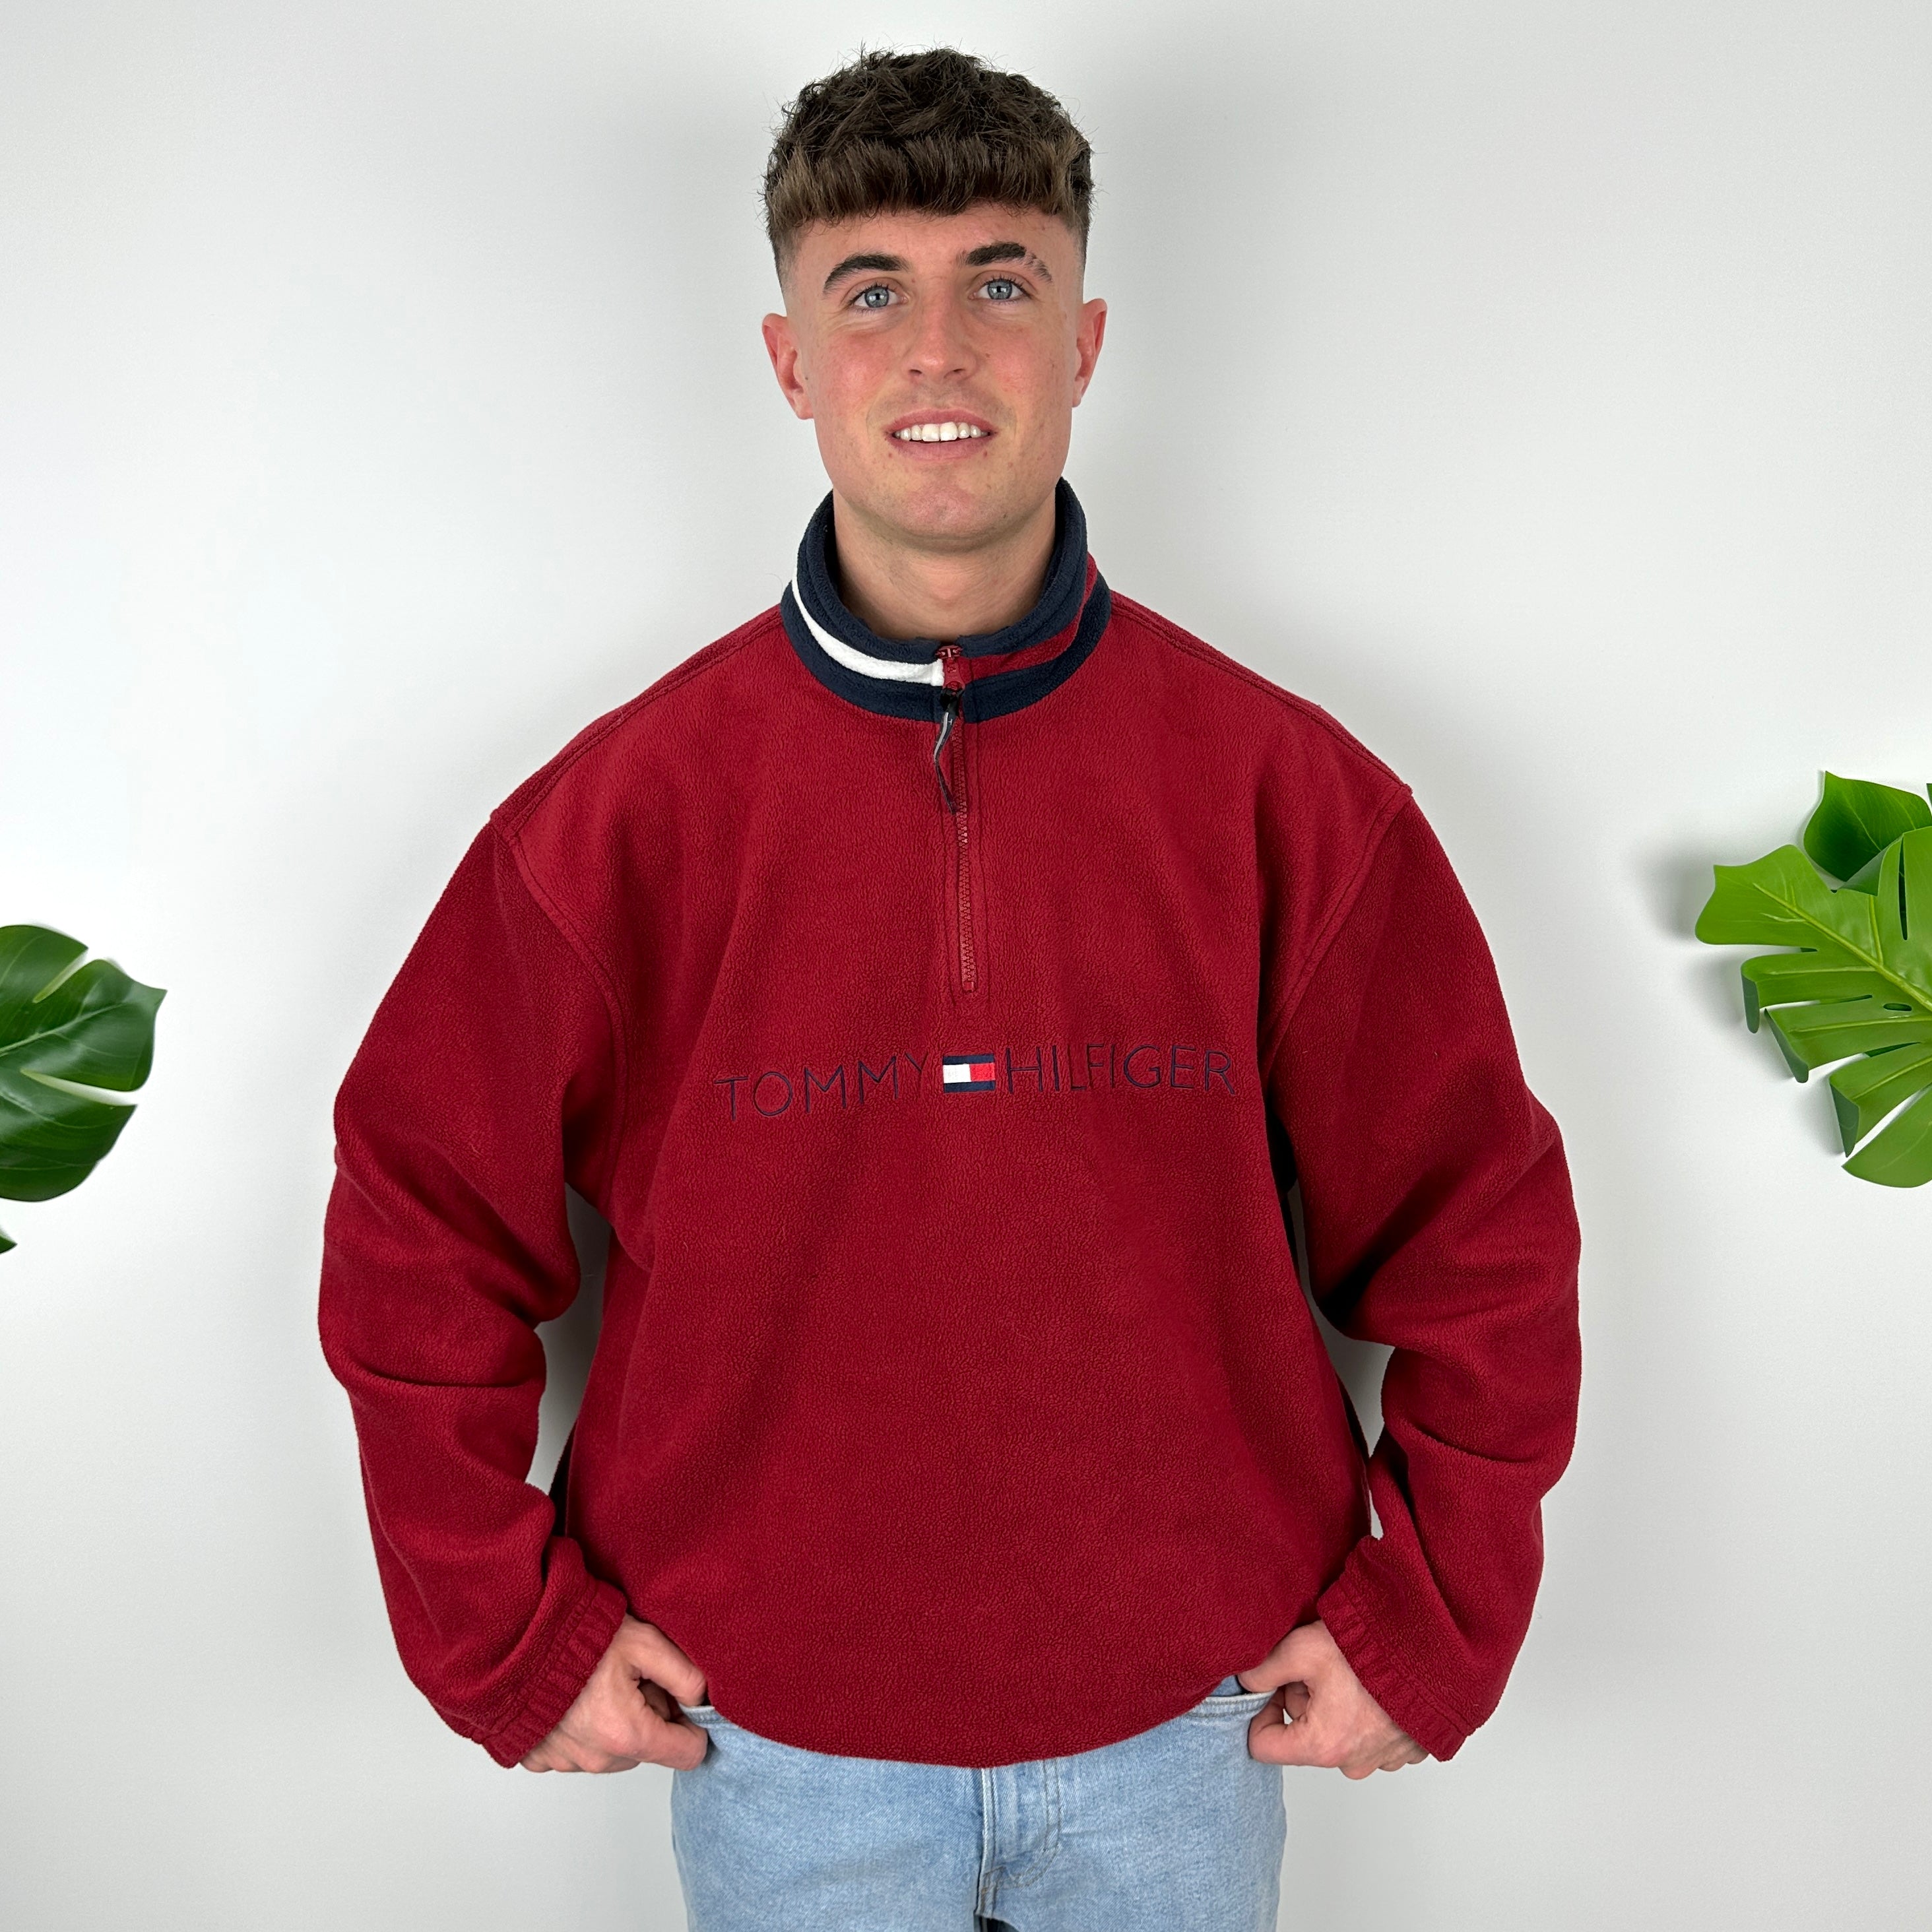 Tommy Hilfiger Red Embroidered Spell Out Teddy Bear Fleece Quarter Zip Sweatshirt (XL)